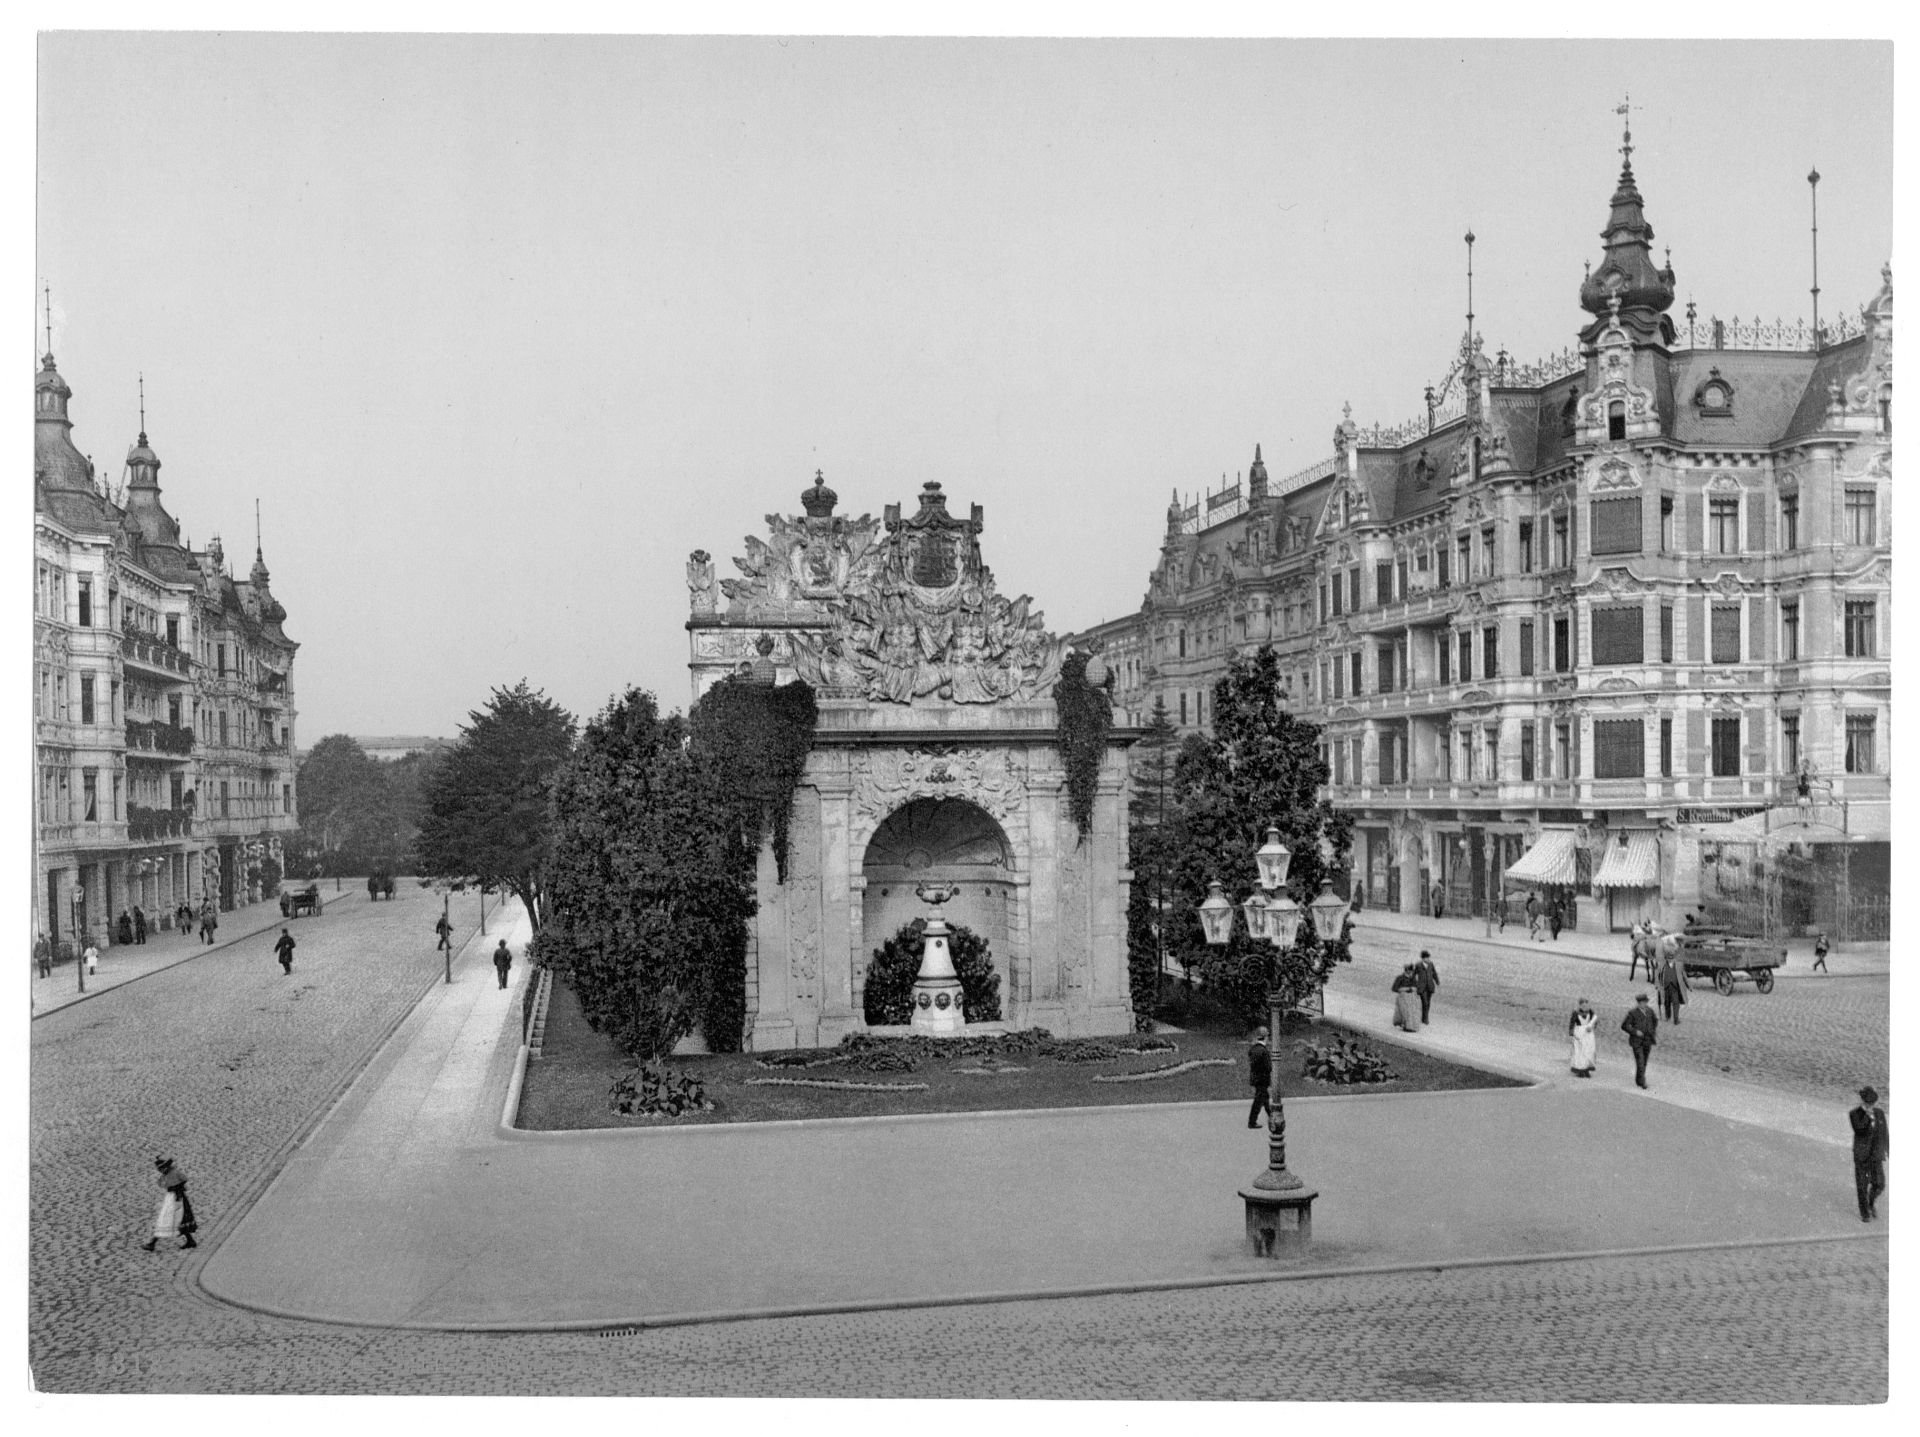 Stettin, Germany (1890s)